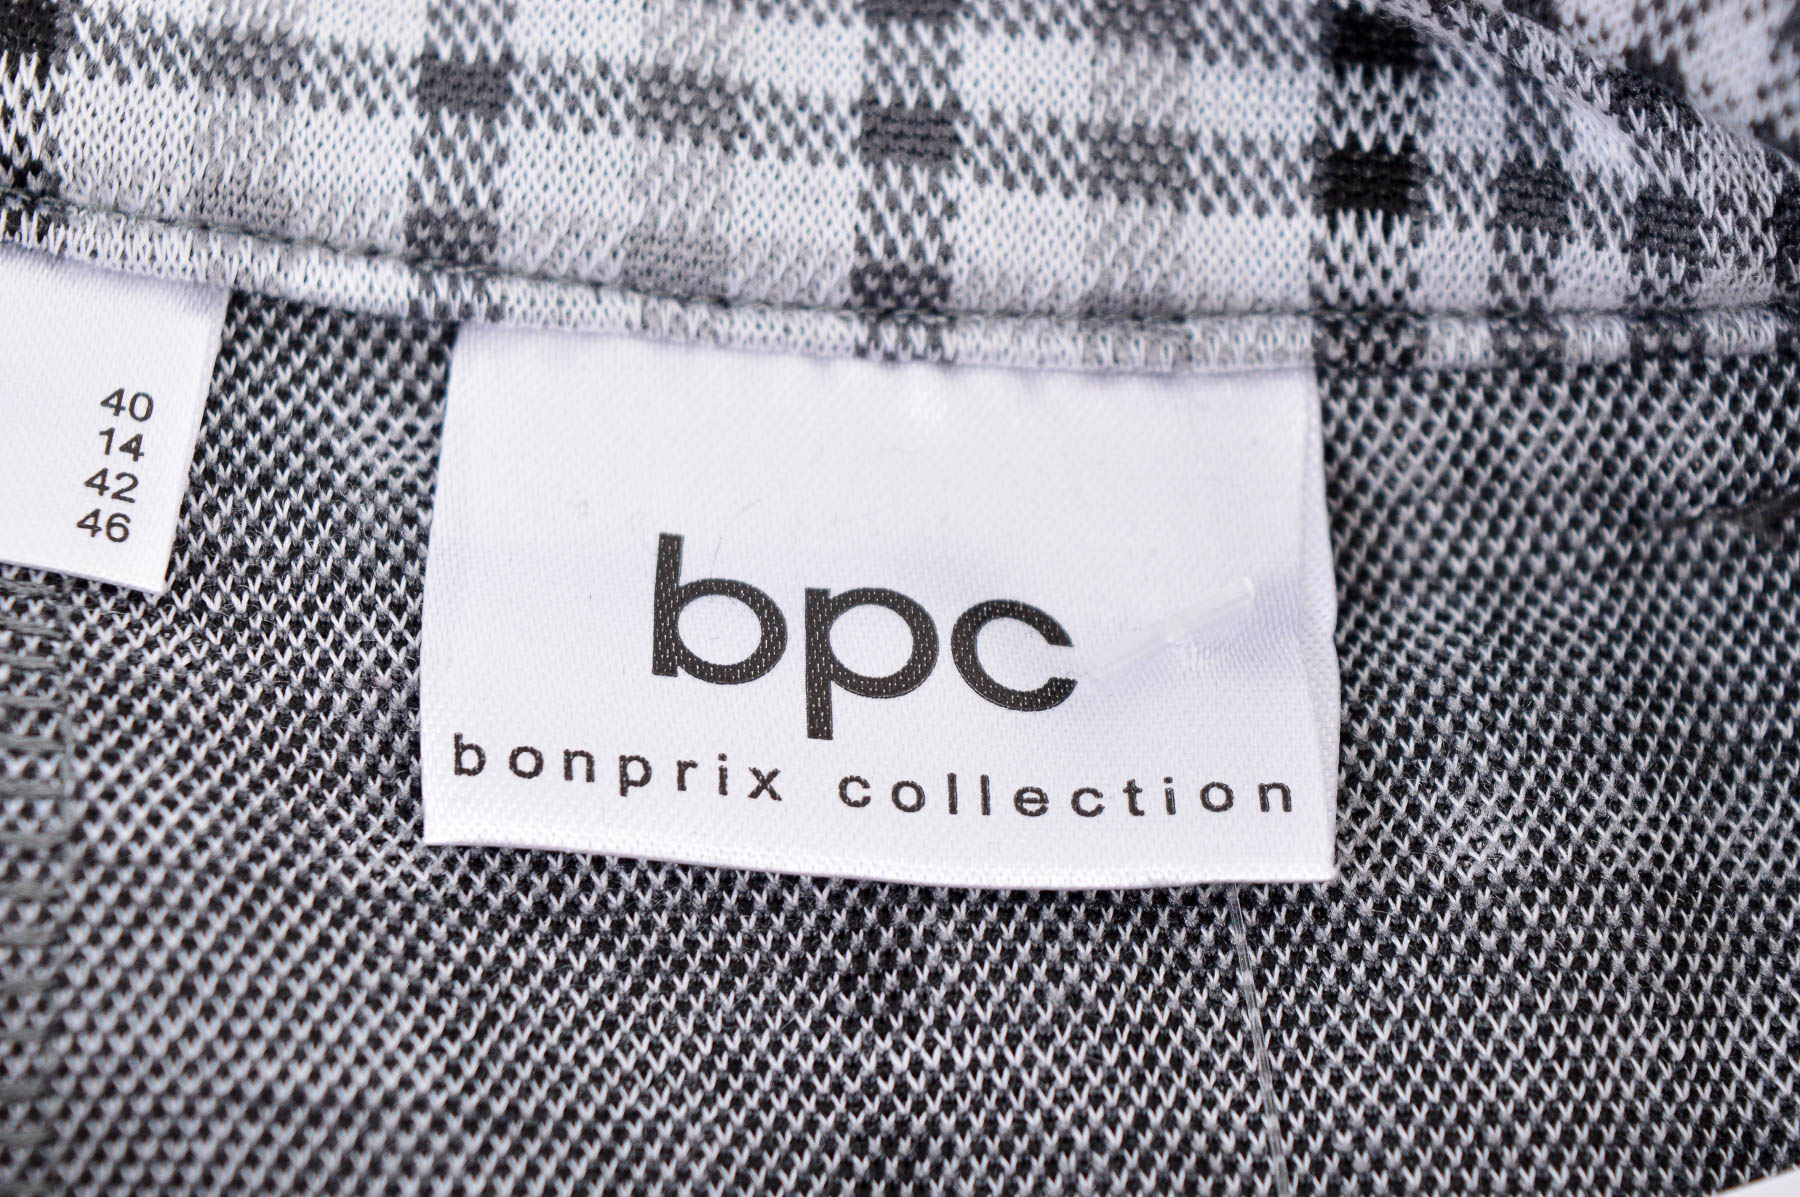 Skirt - Bpc Bonprix Collection - 2